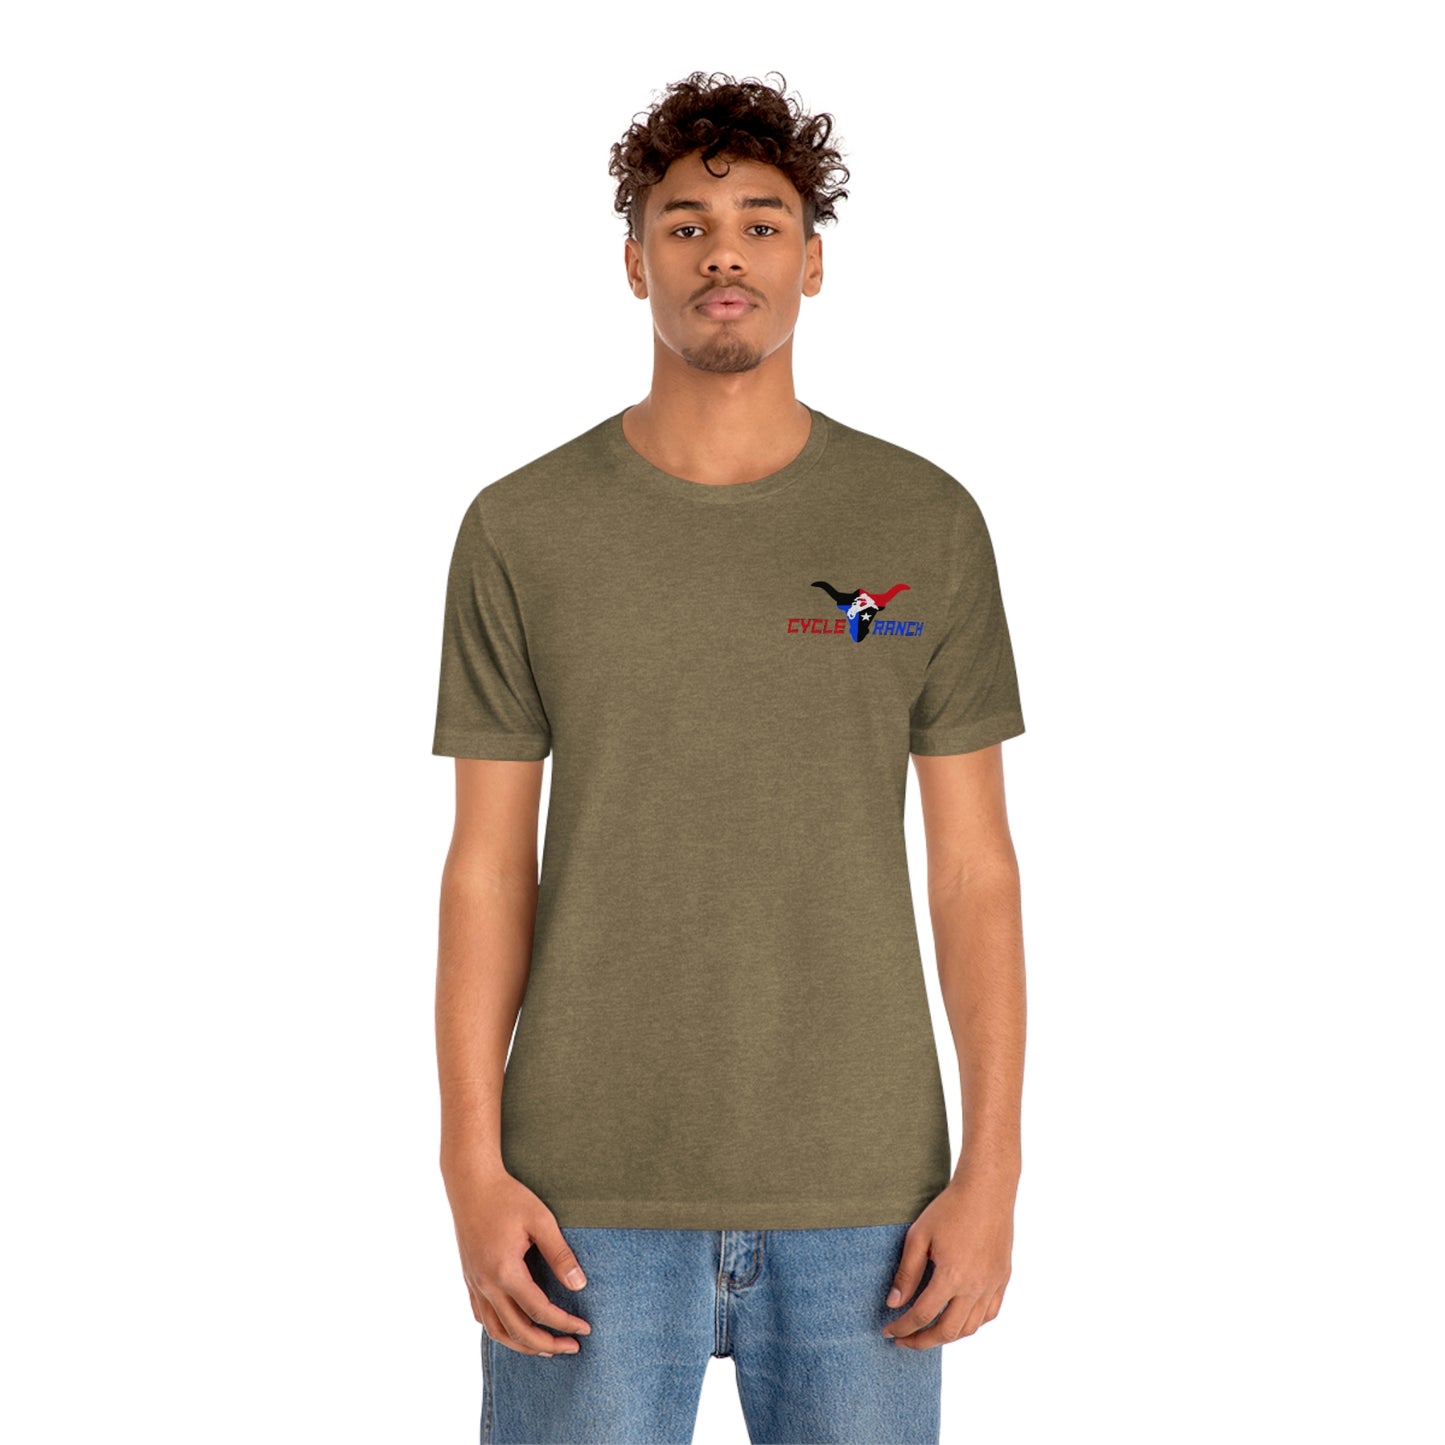 Cycle Ranch Classic T Shirt - Soft